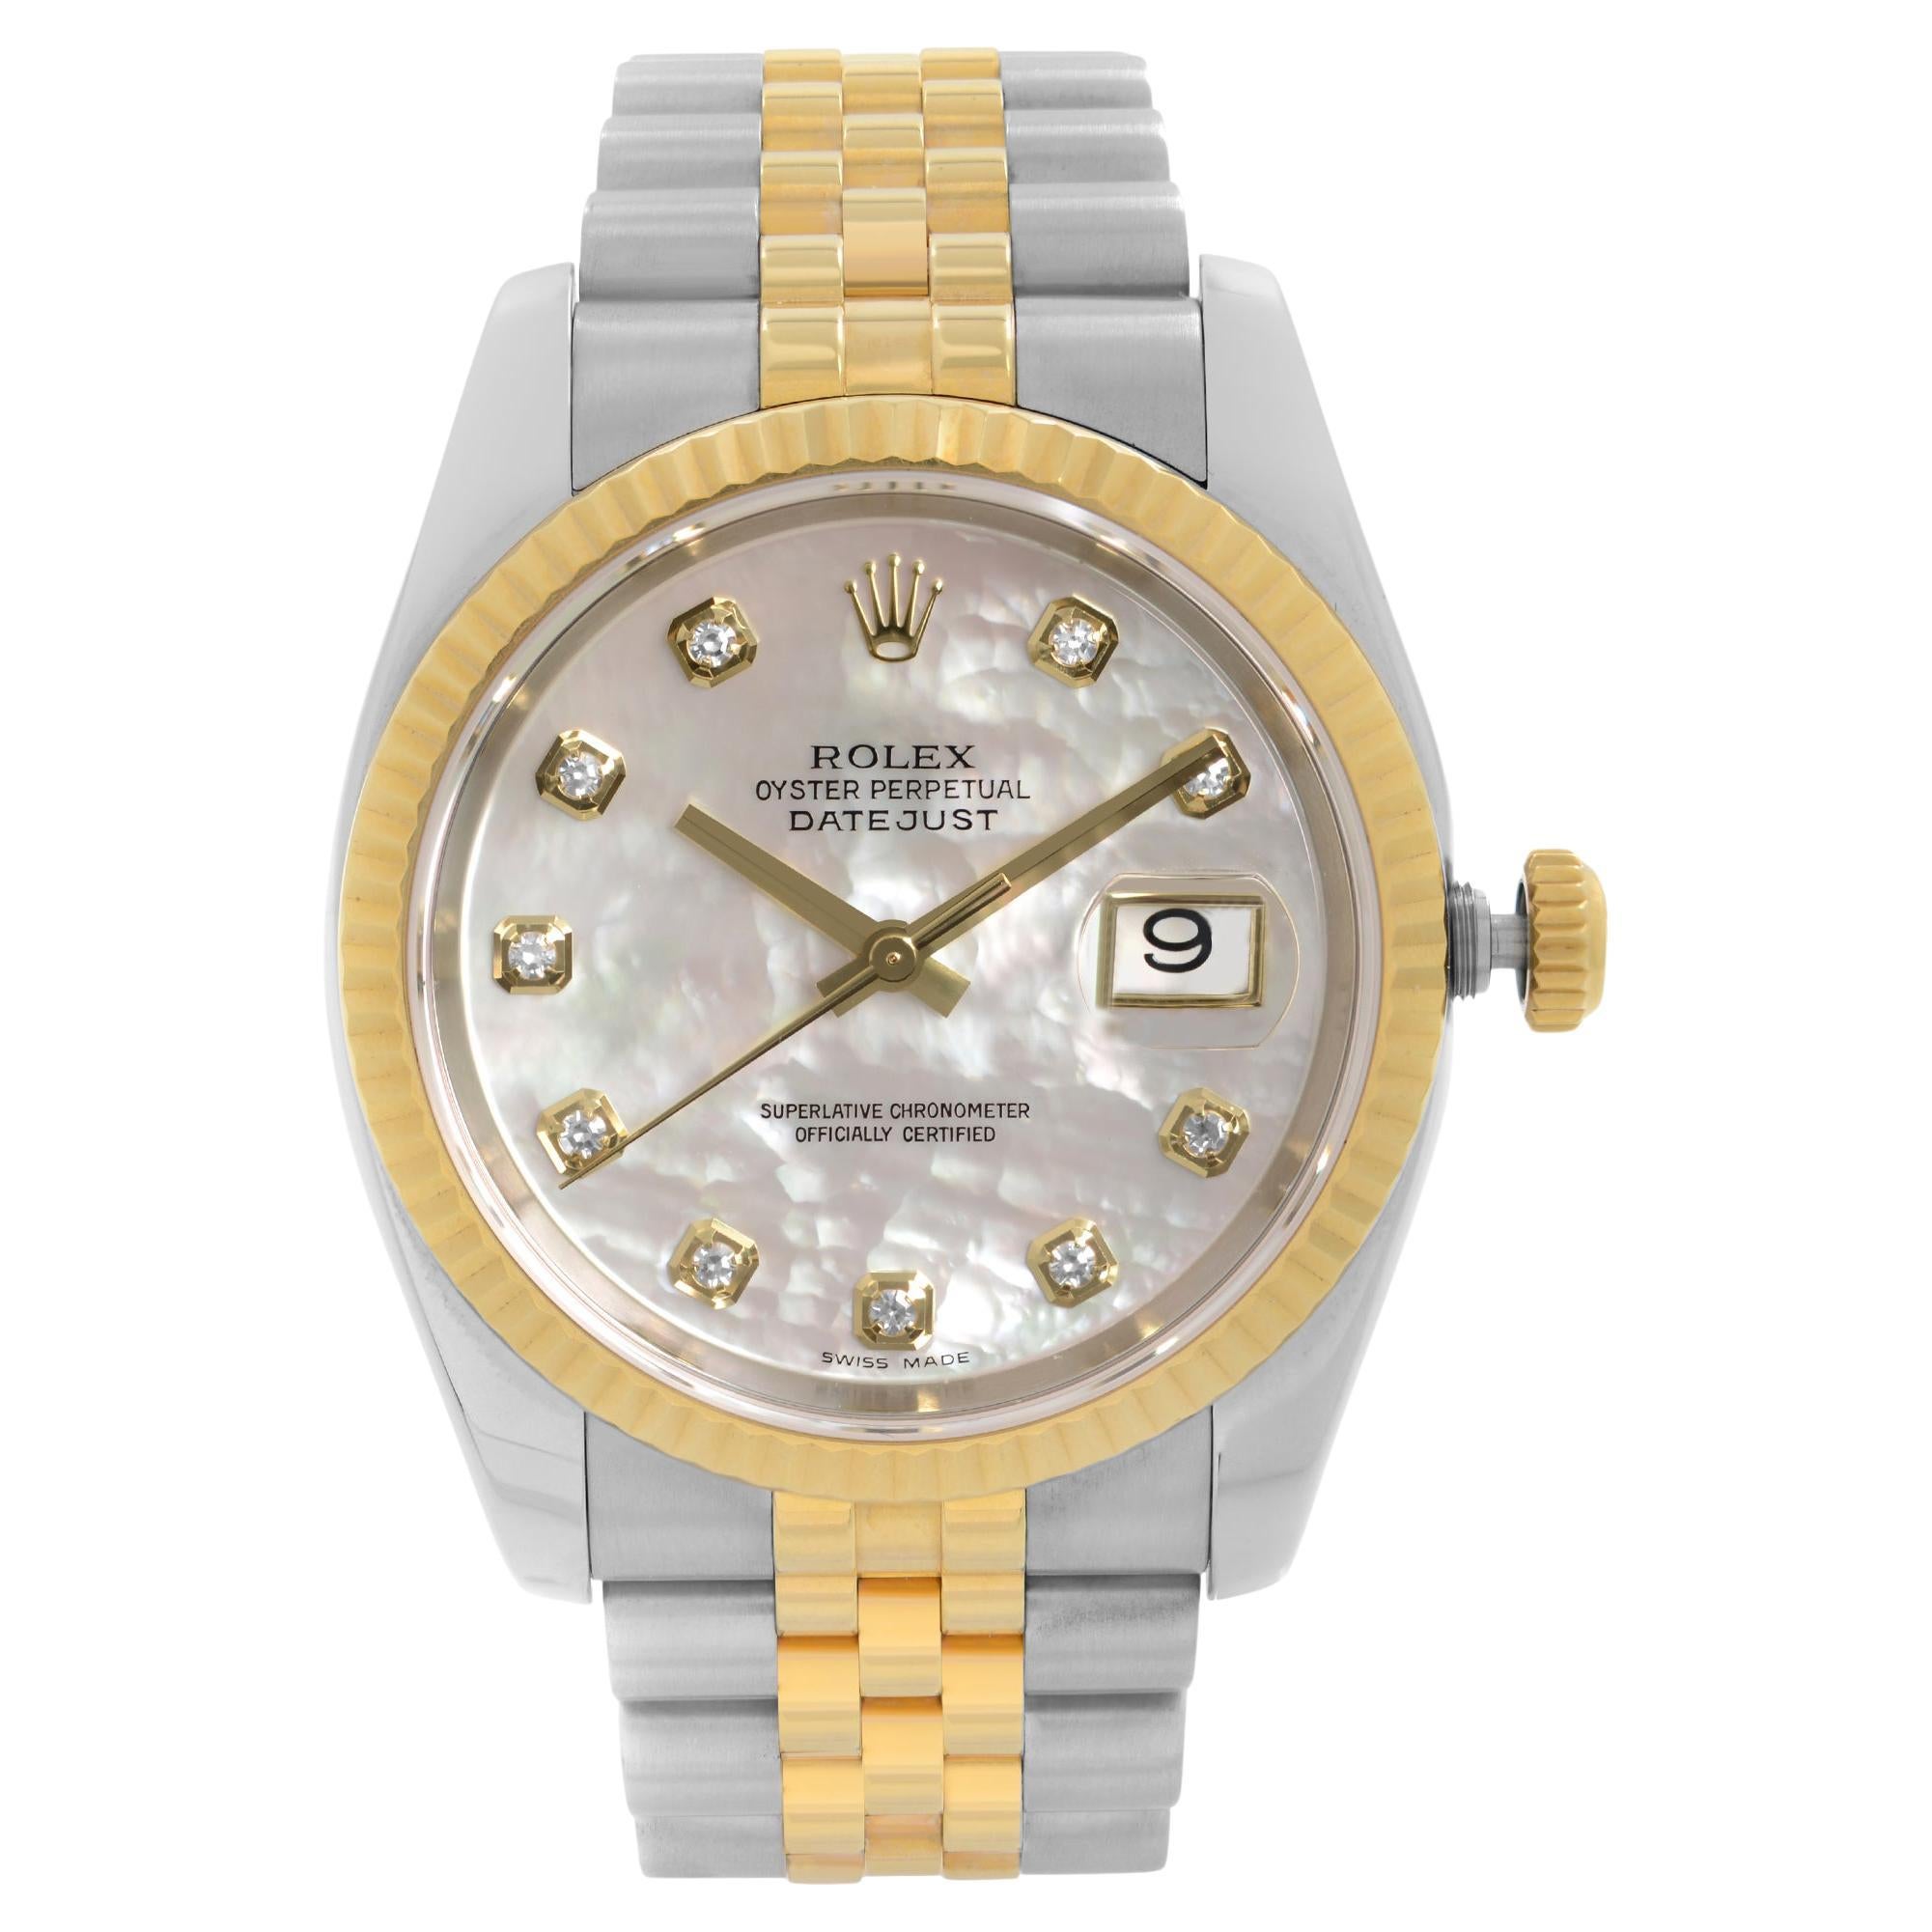 Rolex Datejust 36mm 18k Gold Steel MOP Diamond Dial Automatic Mens Watch 116233